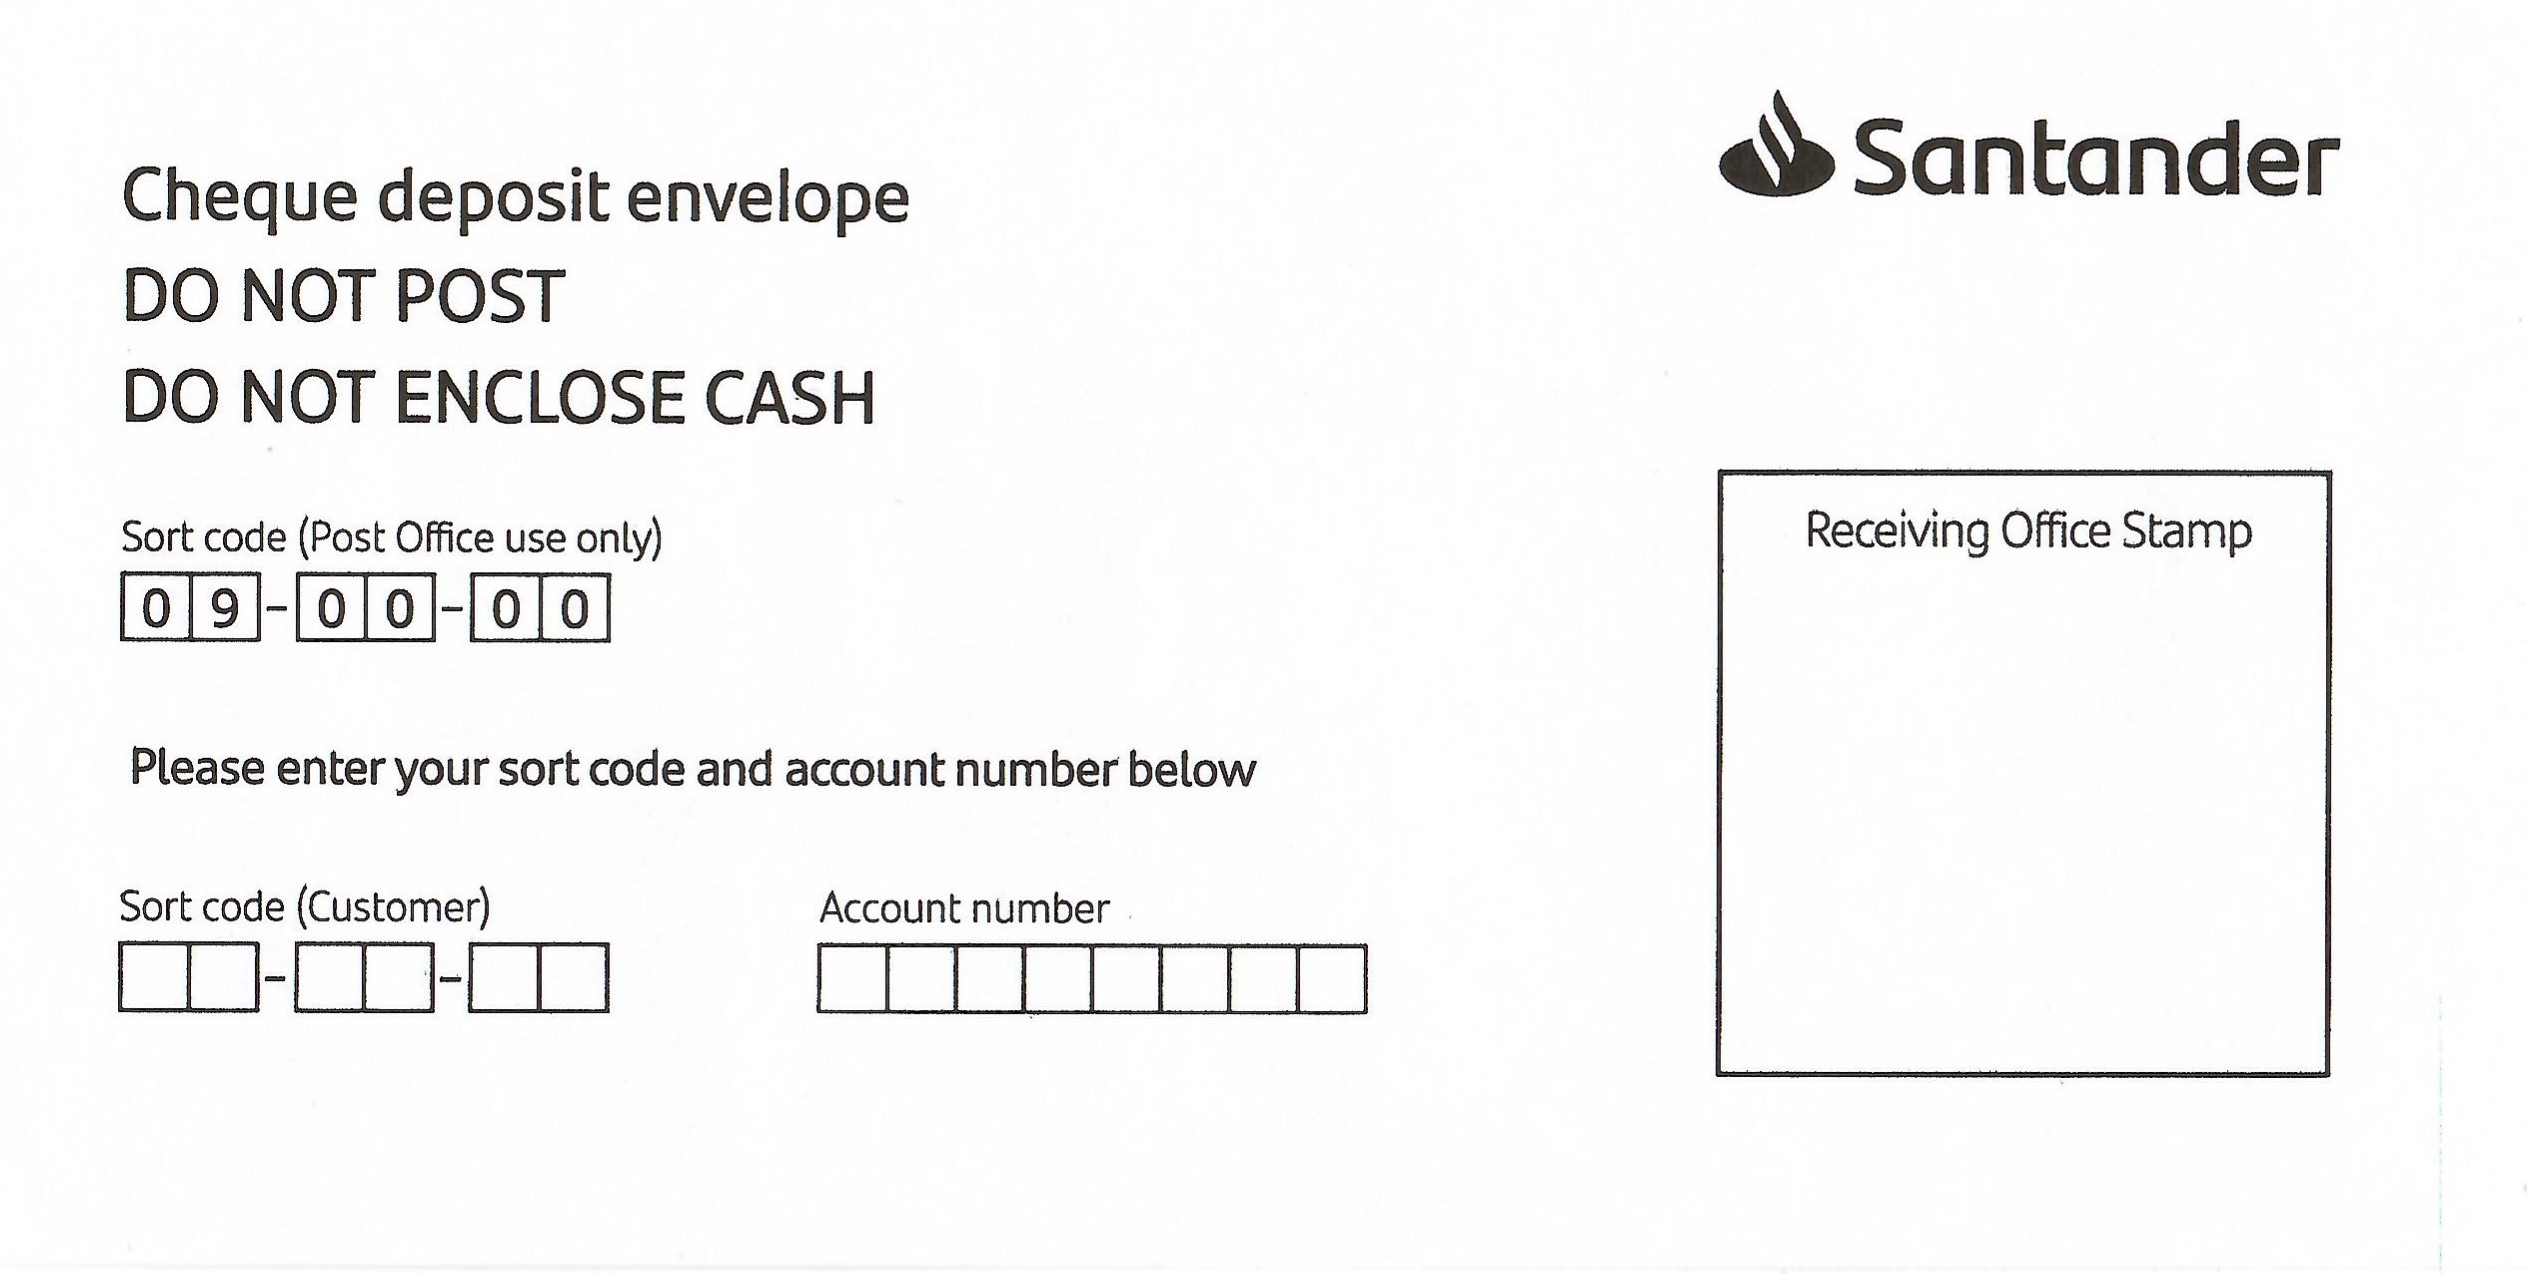 Santander Cheque Deposit Envelope